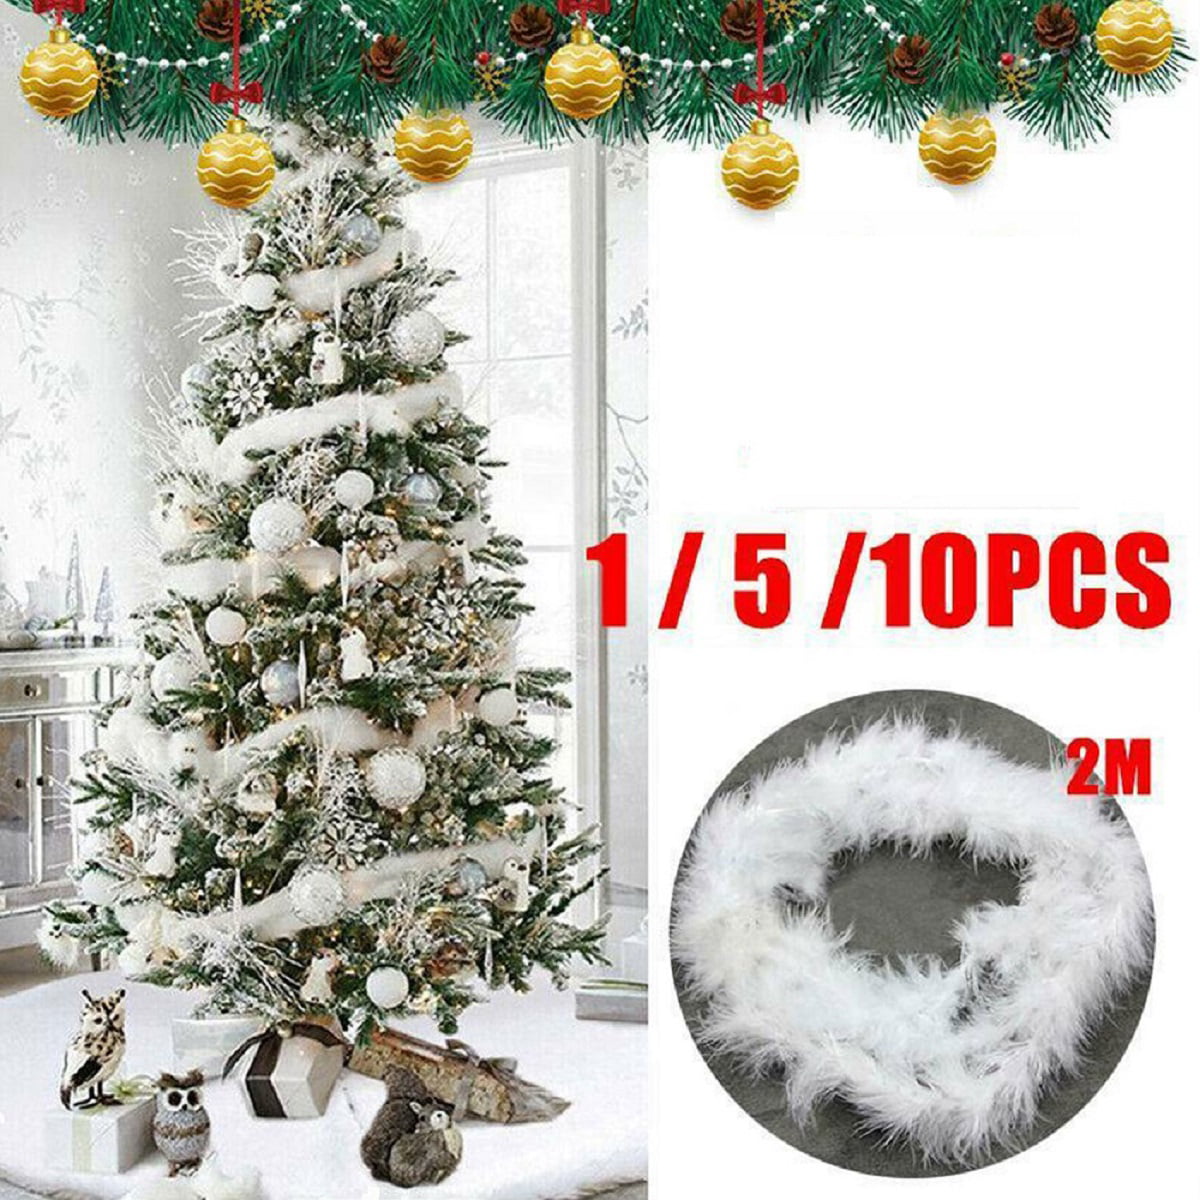 2M White Christmas Tree Feather Boa Strip Xmas Ribbon Party Garland Decor 